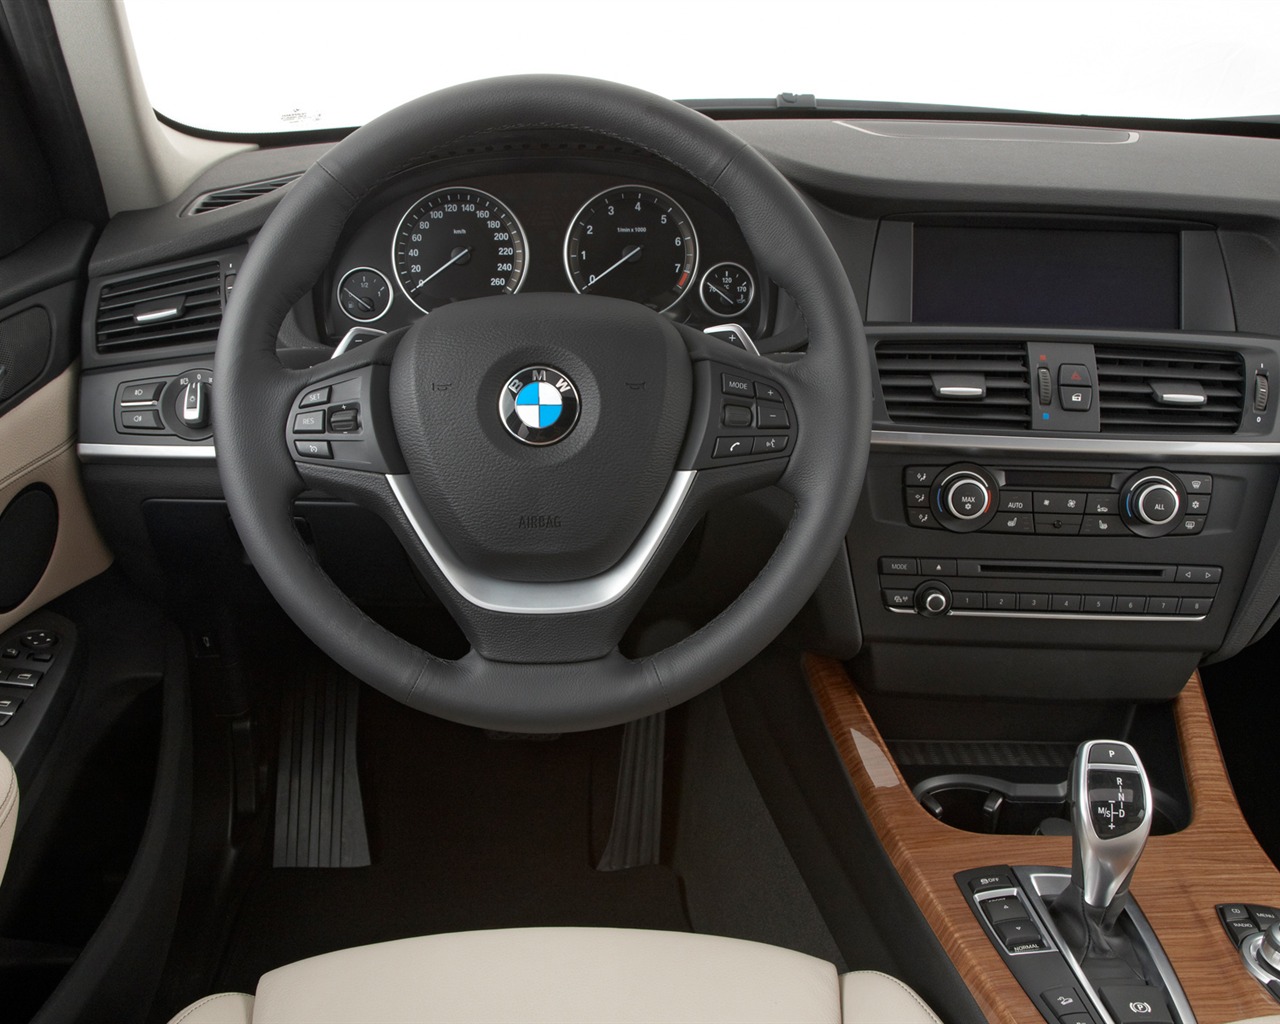 BMW X3 xDrive35i - 2010 寶馬(一) #40 - 1280x1024